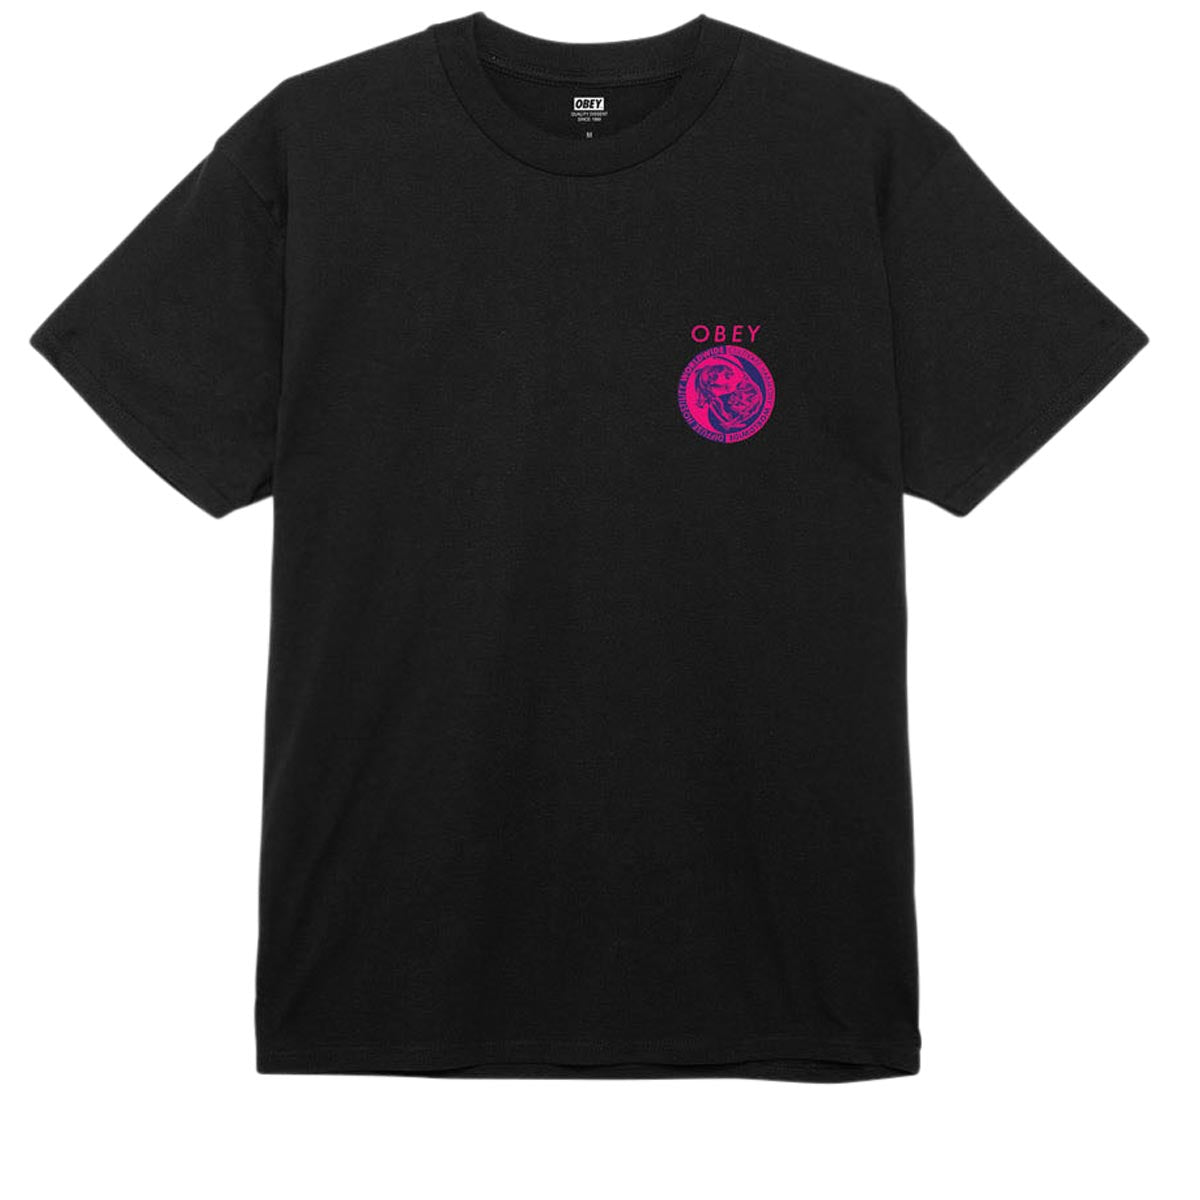 Obey Yin Yang Panthers T-Shirt - Black image 2